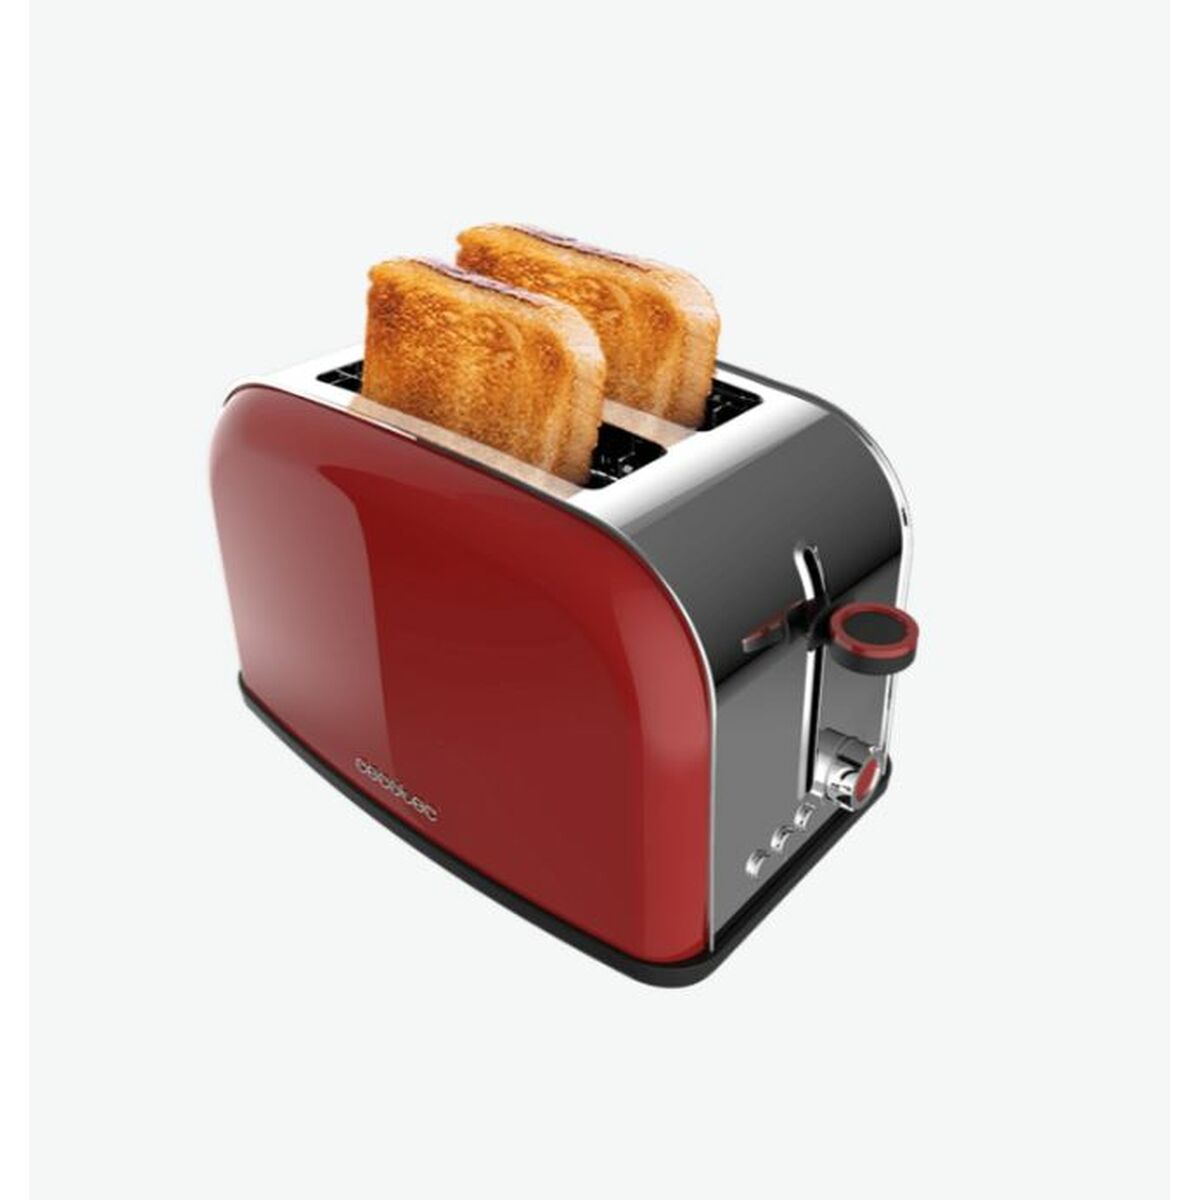 Toaster Cecotec Toastin' time 850 850 W - CA International  